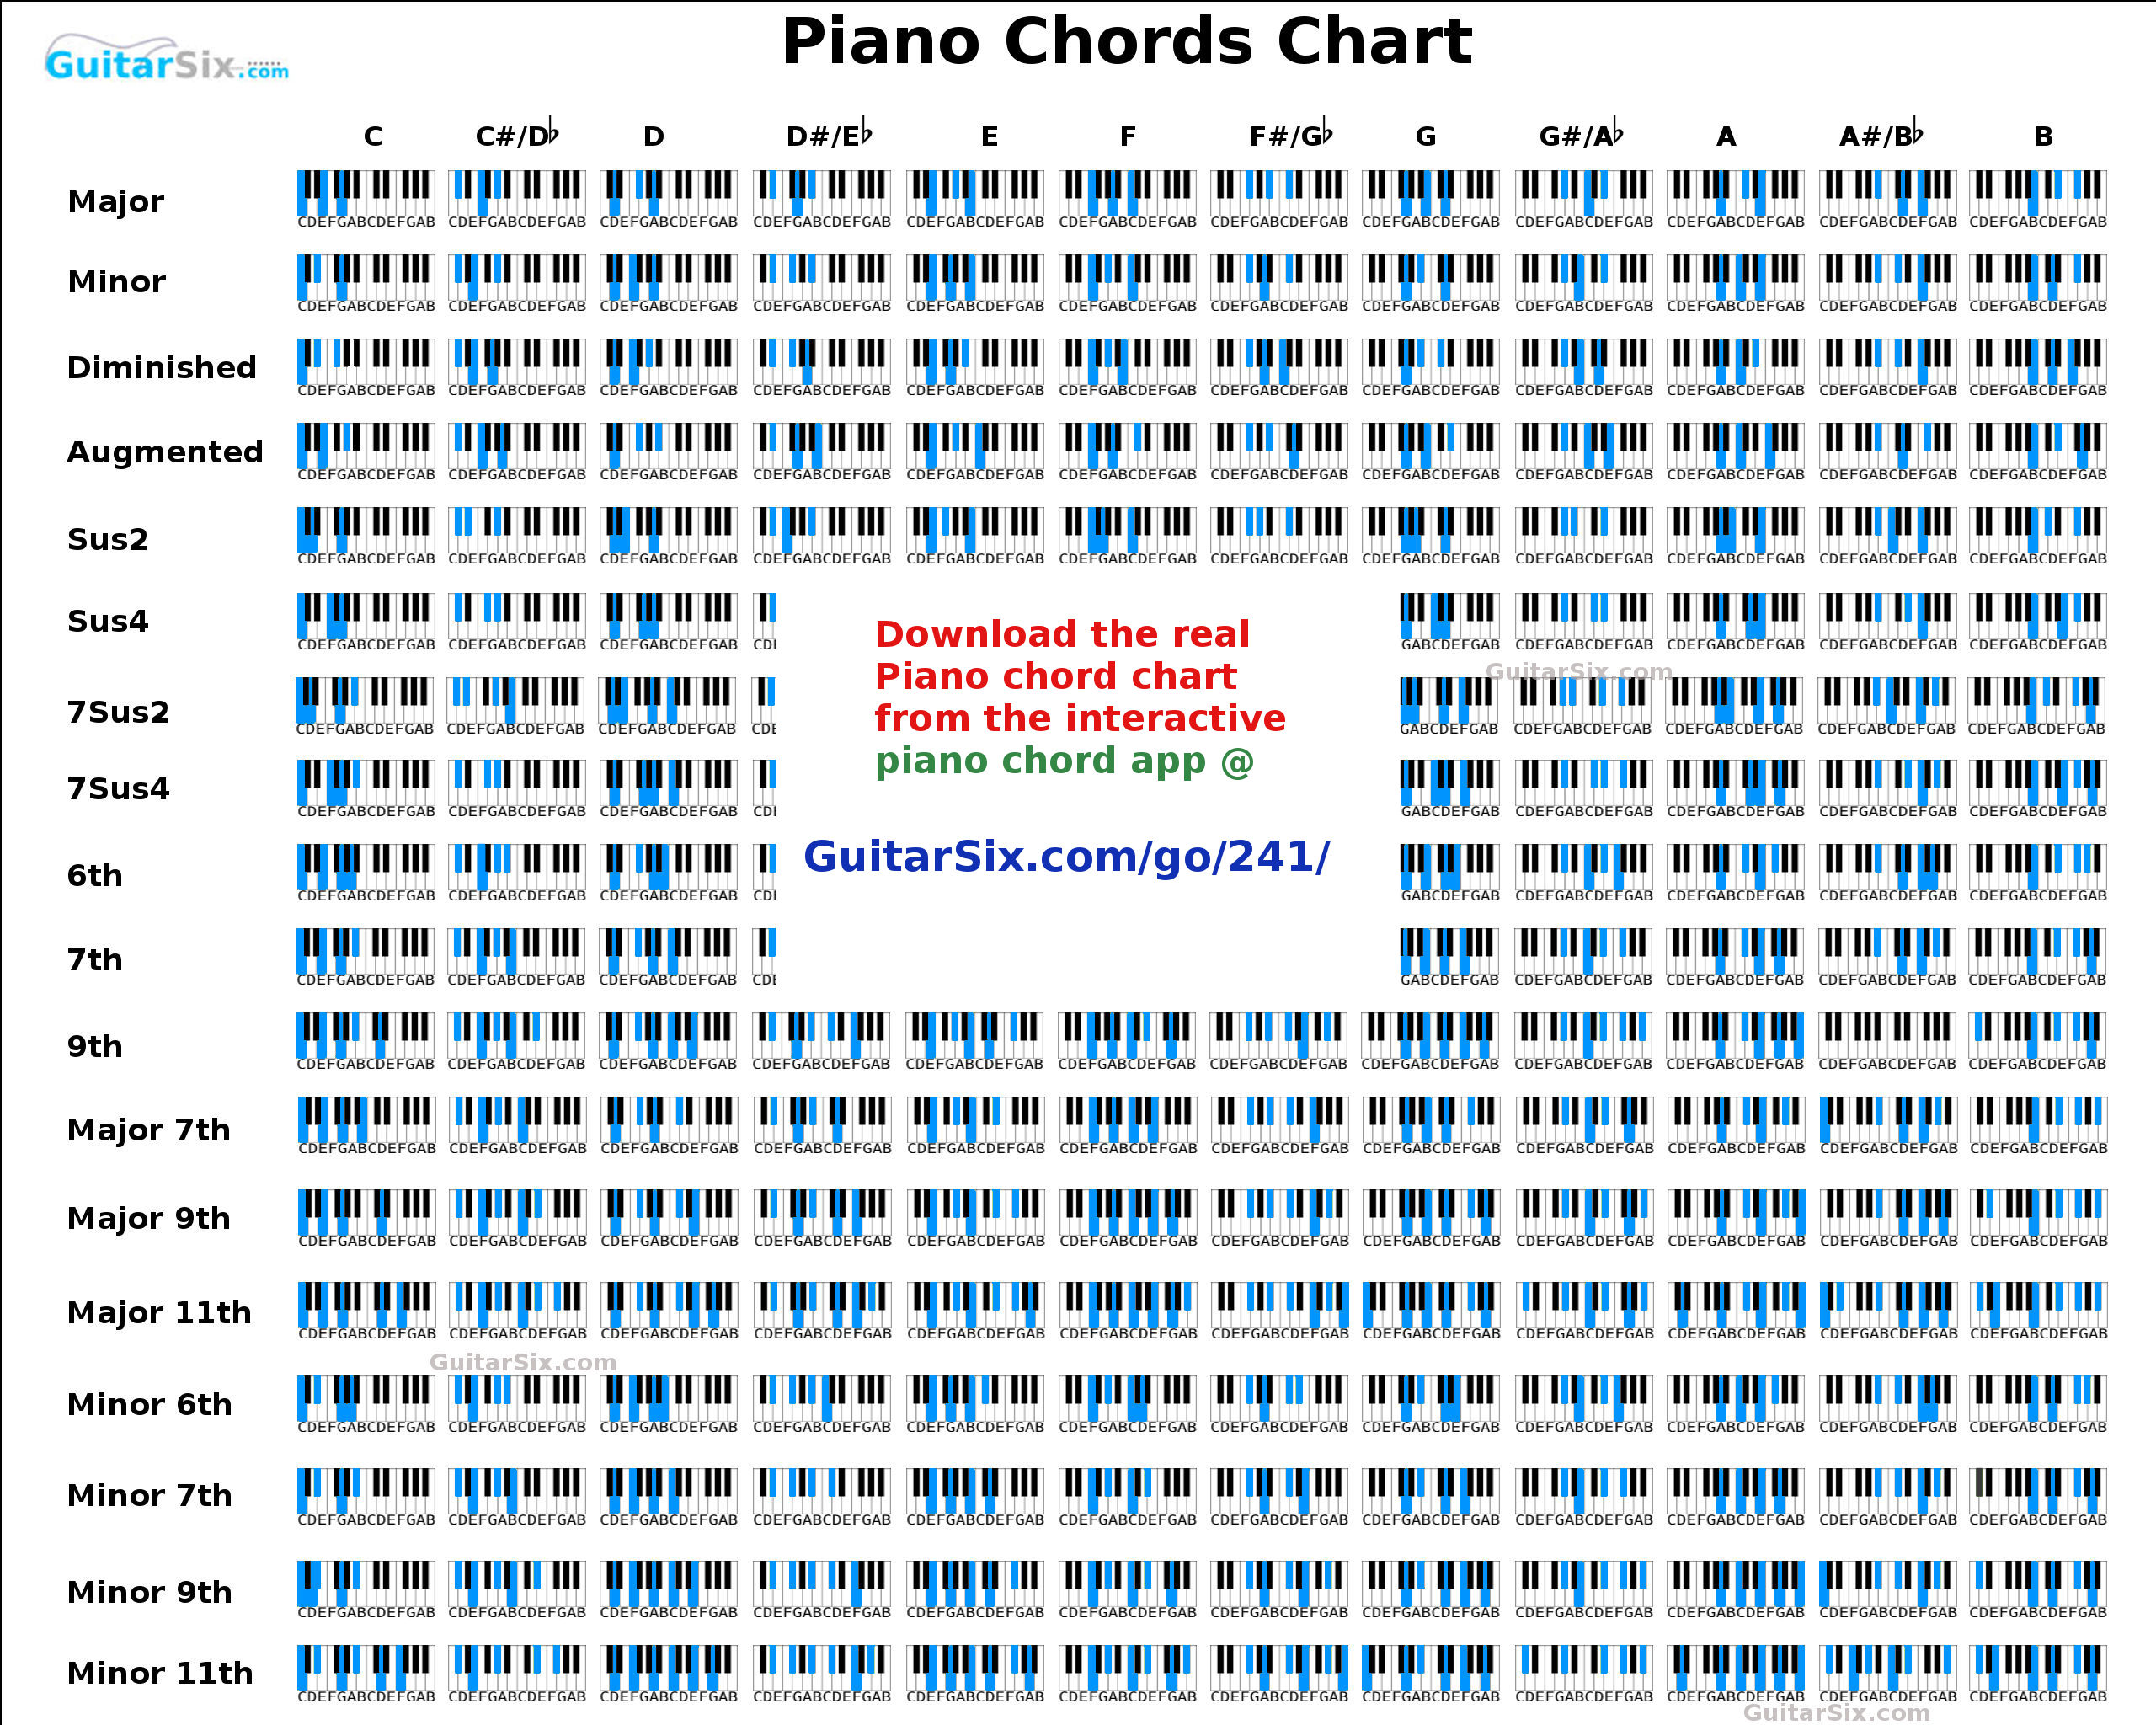 Free Printable Piano Chord Chart - images.go-banana.com